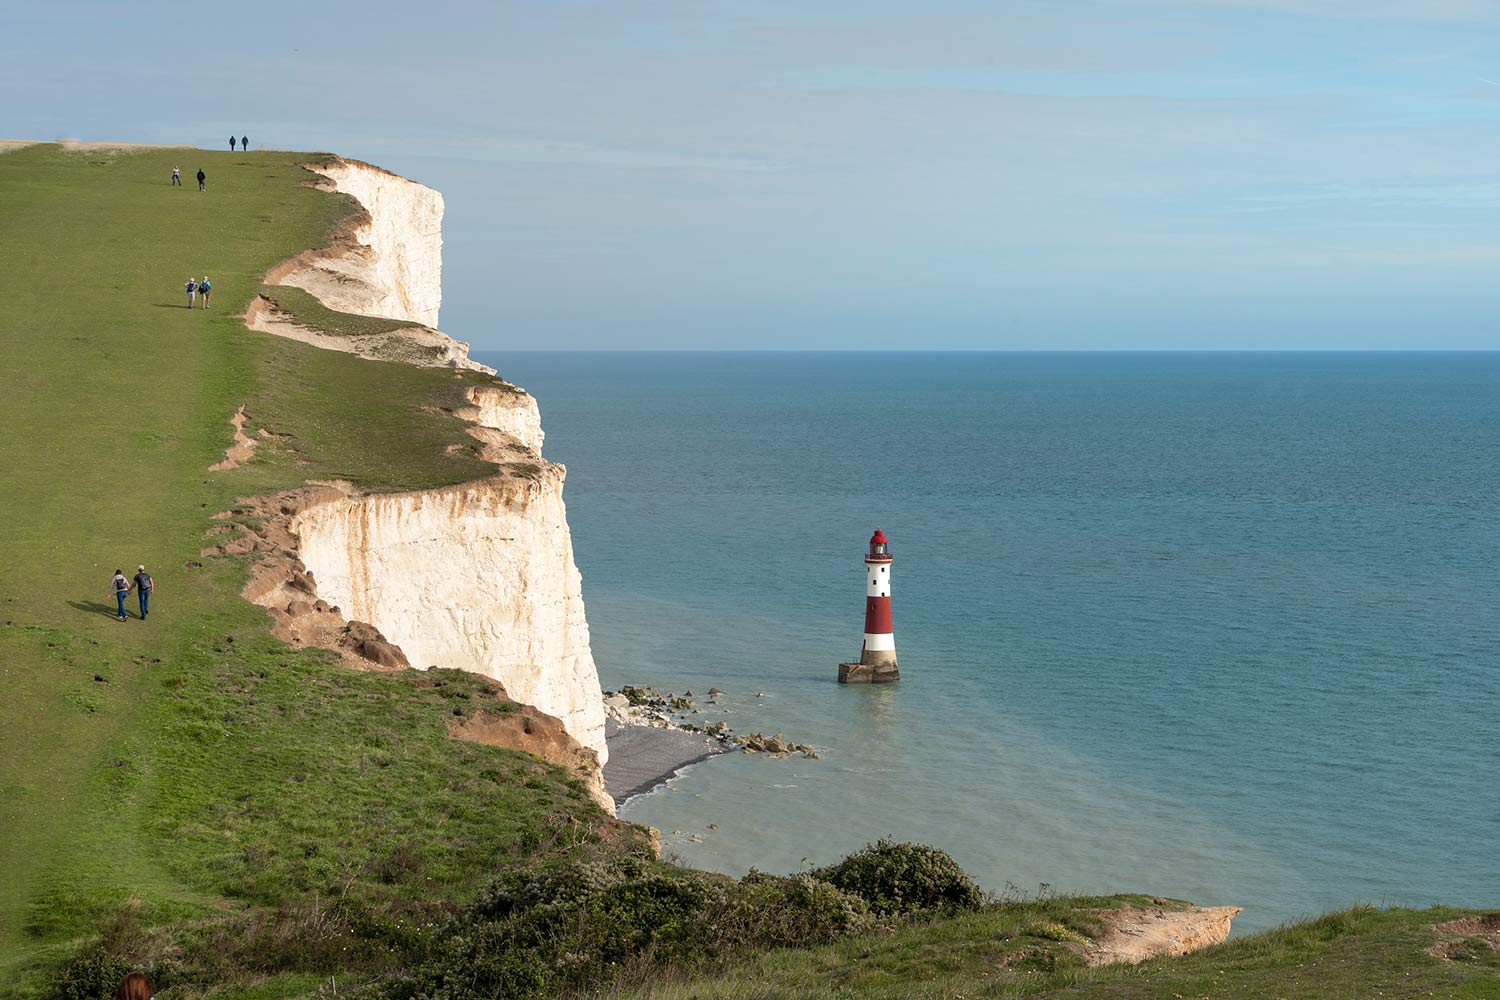 Phare de Beachy Head, Seven Sisters, East Sussex, Angleterre, Royaume-Uni / Beachy Head Lighthouse, Seven Sisters, East Sussex, England, UK